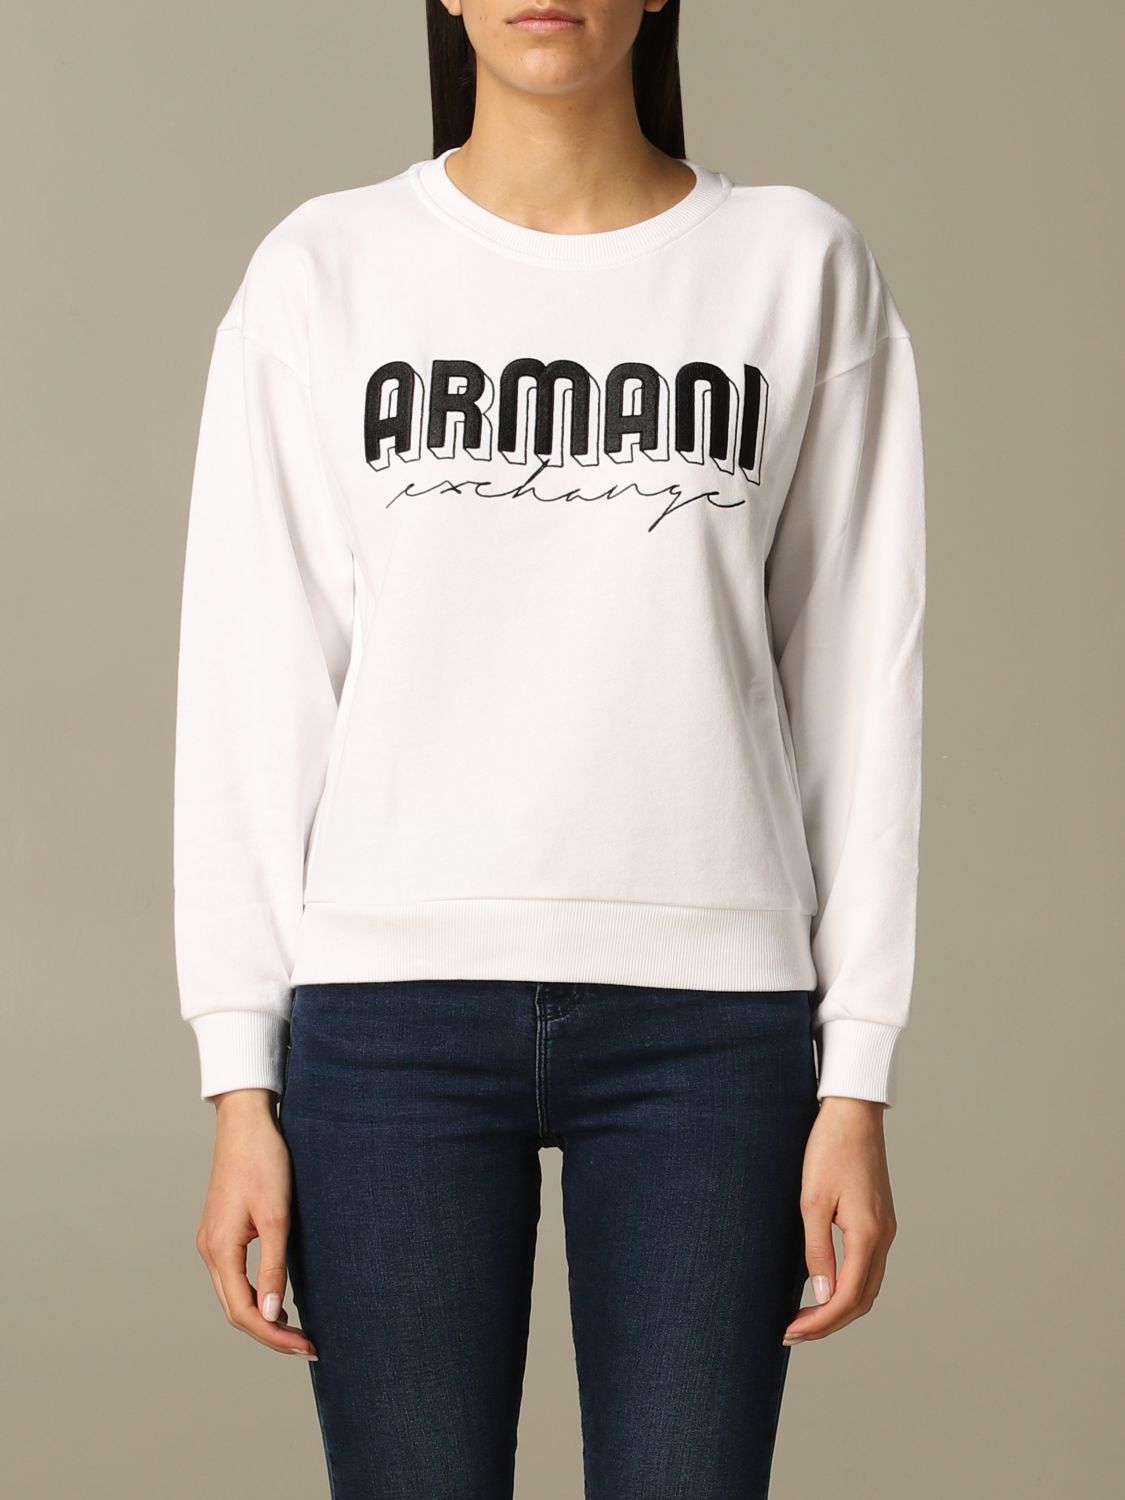 armani exchange sweater women's